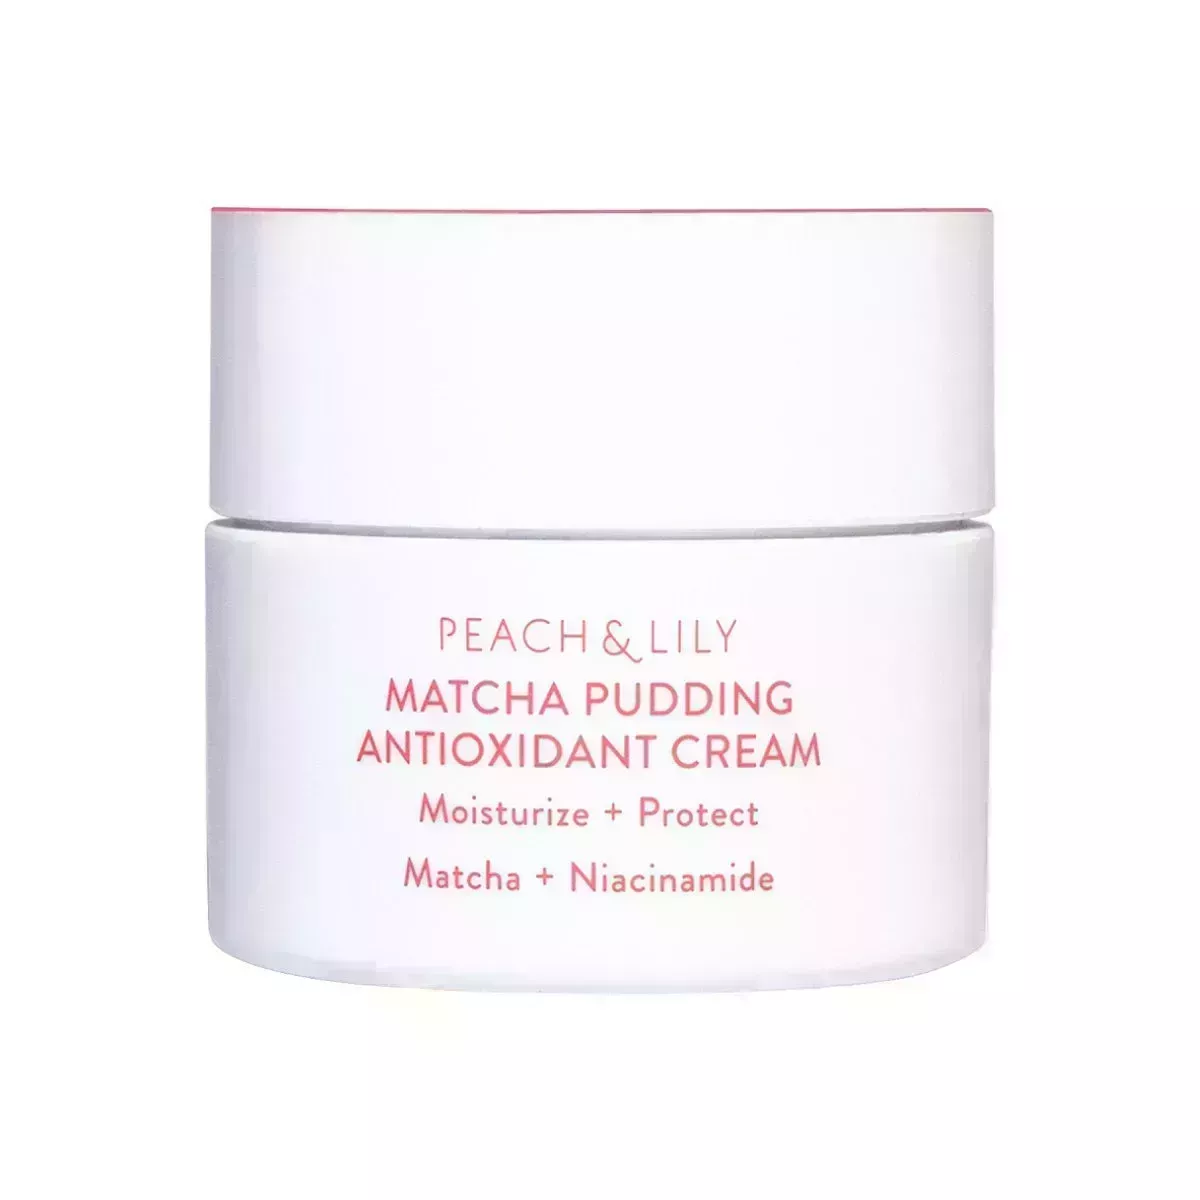 Peach & Lily Matcha Pudding Antioxidant Cream on white background